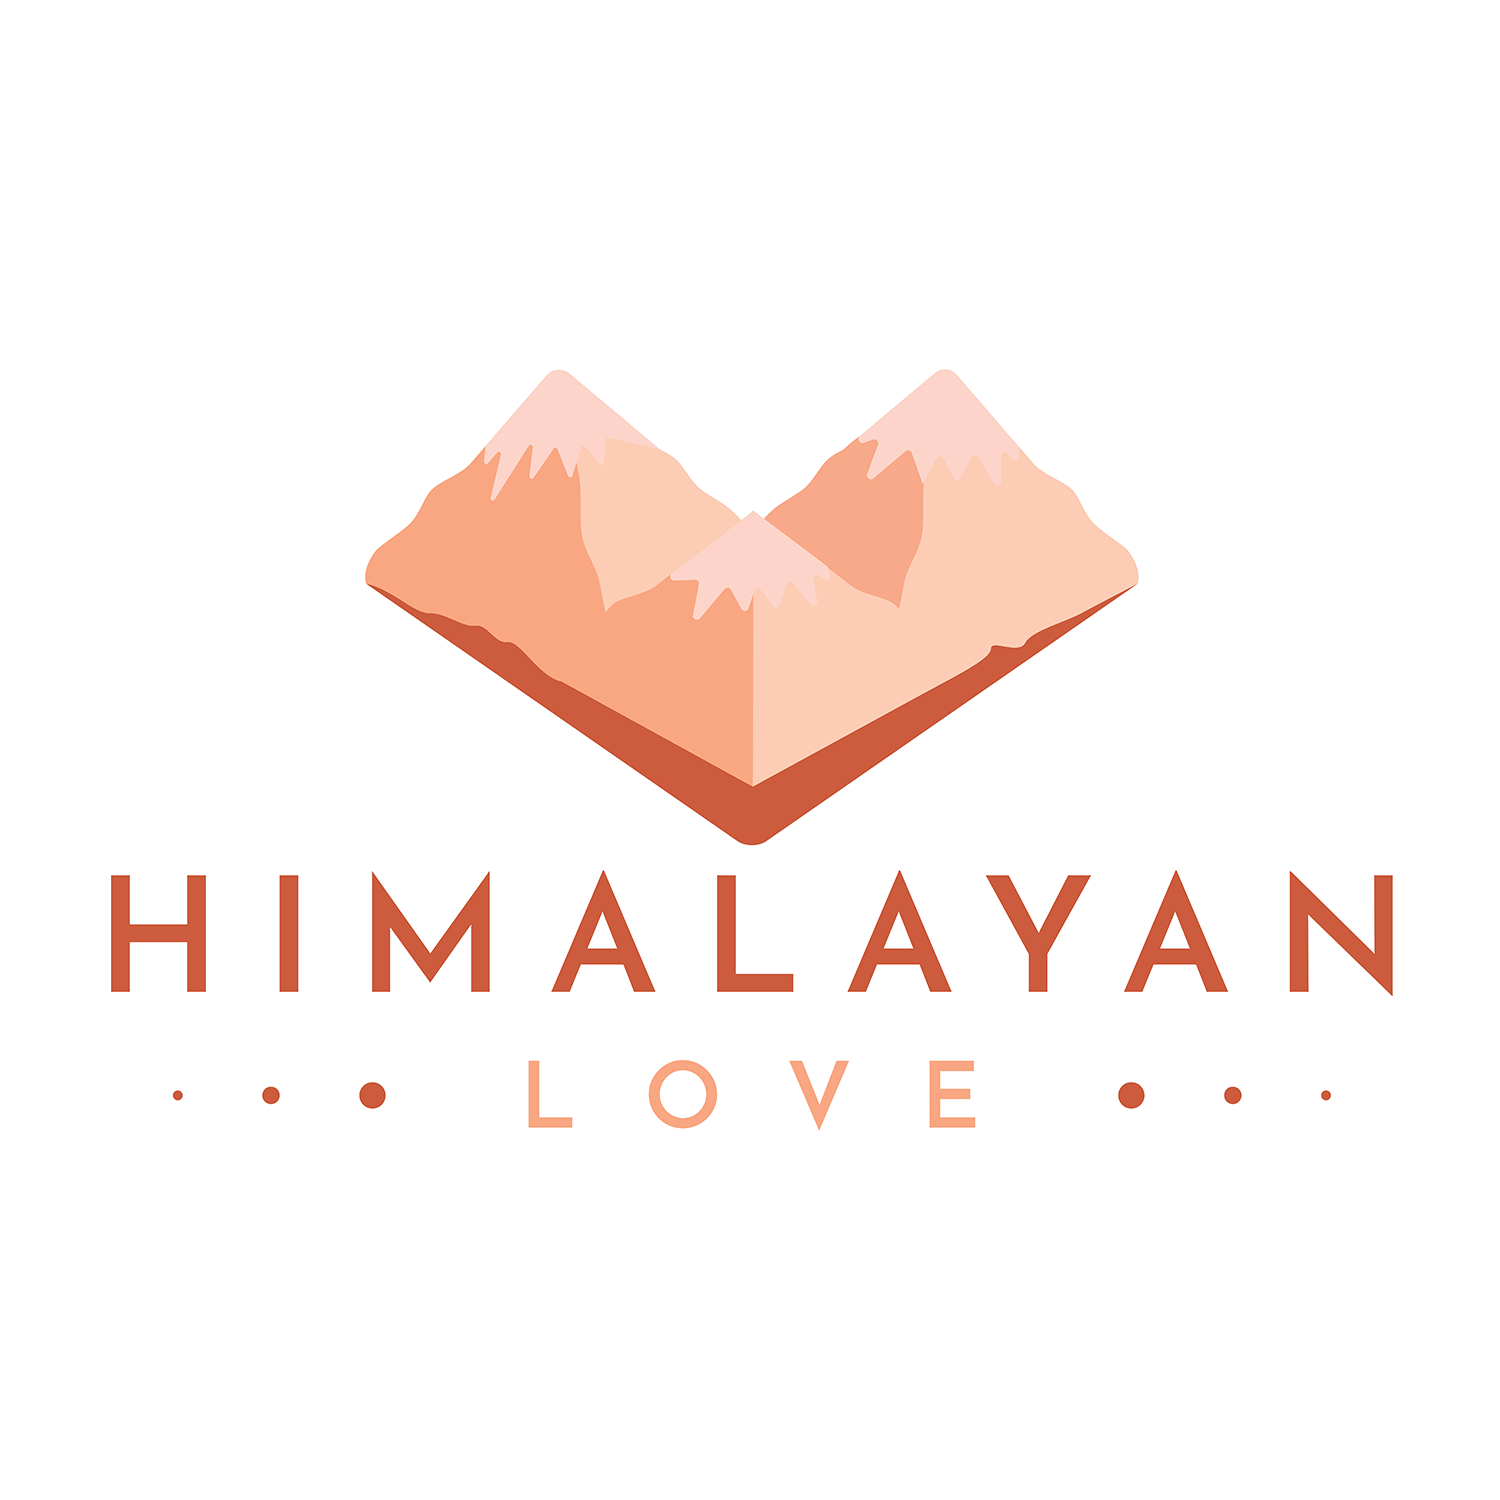 Himalayan Love